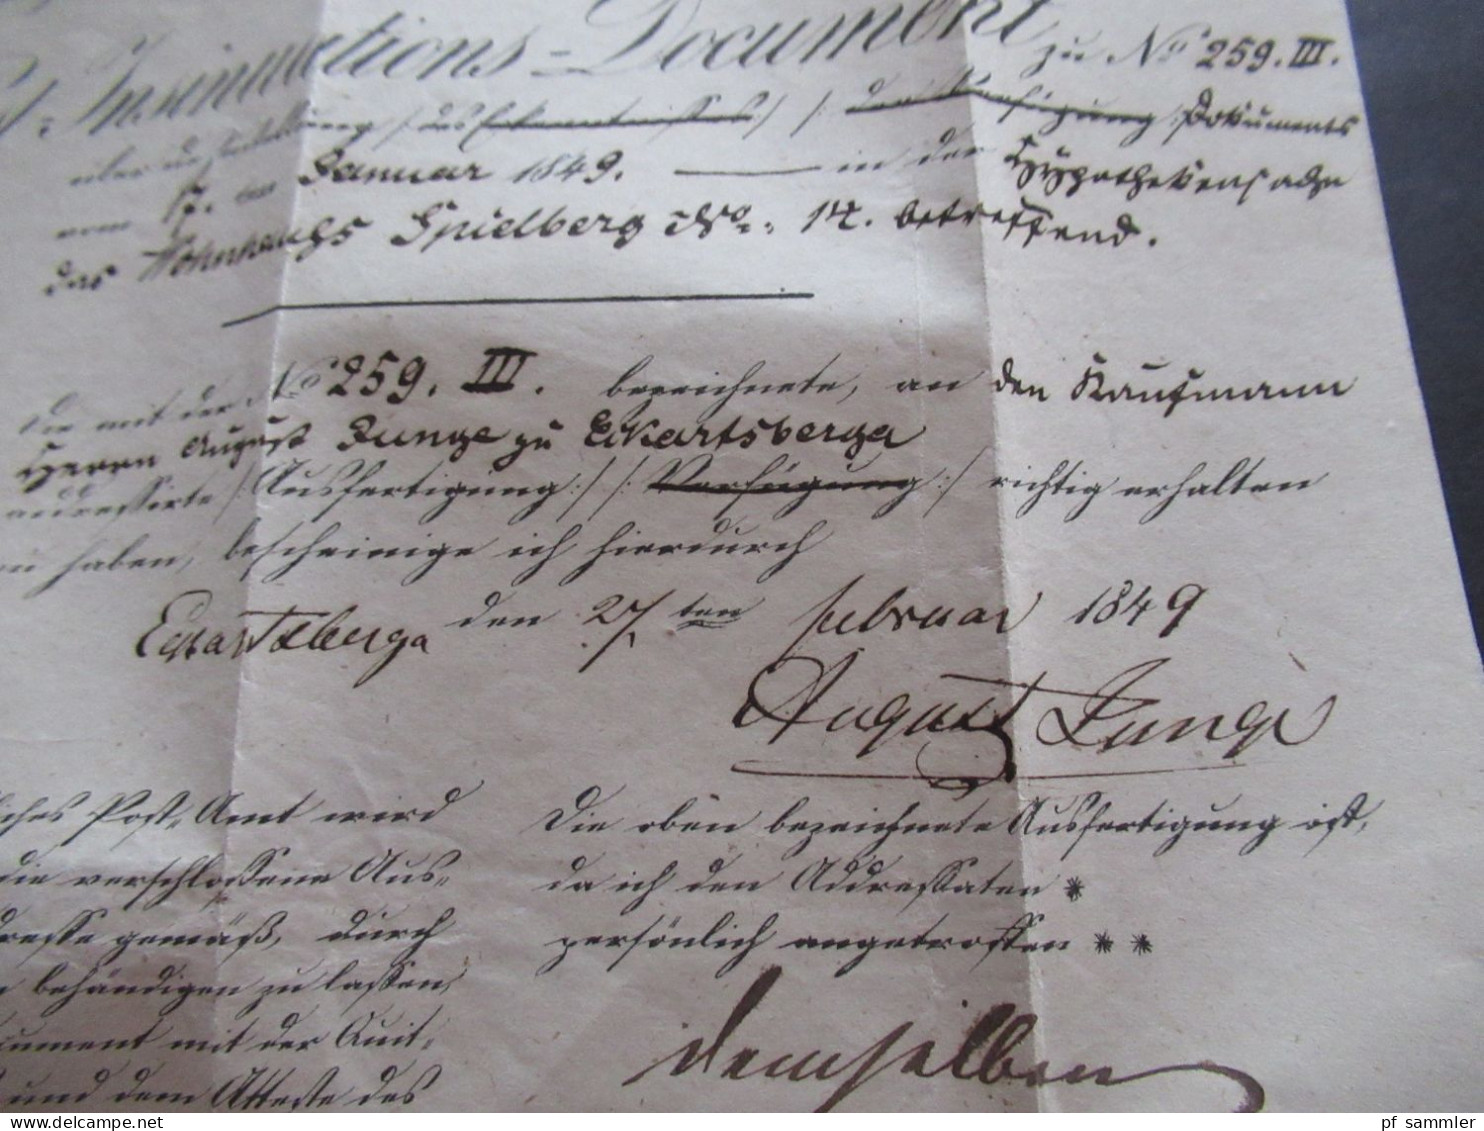 Vorphila / AD Sachsen 1849 Stempel K2 Eckartsberga / Faltbrief mit Inhalt / Post Insinuations Document / Naumburg